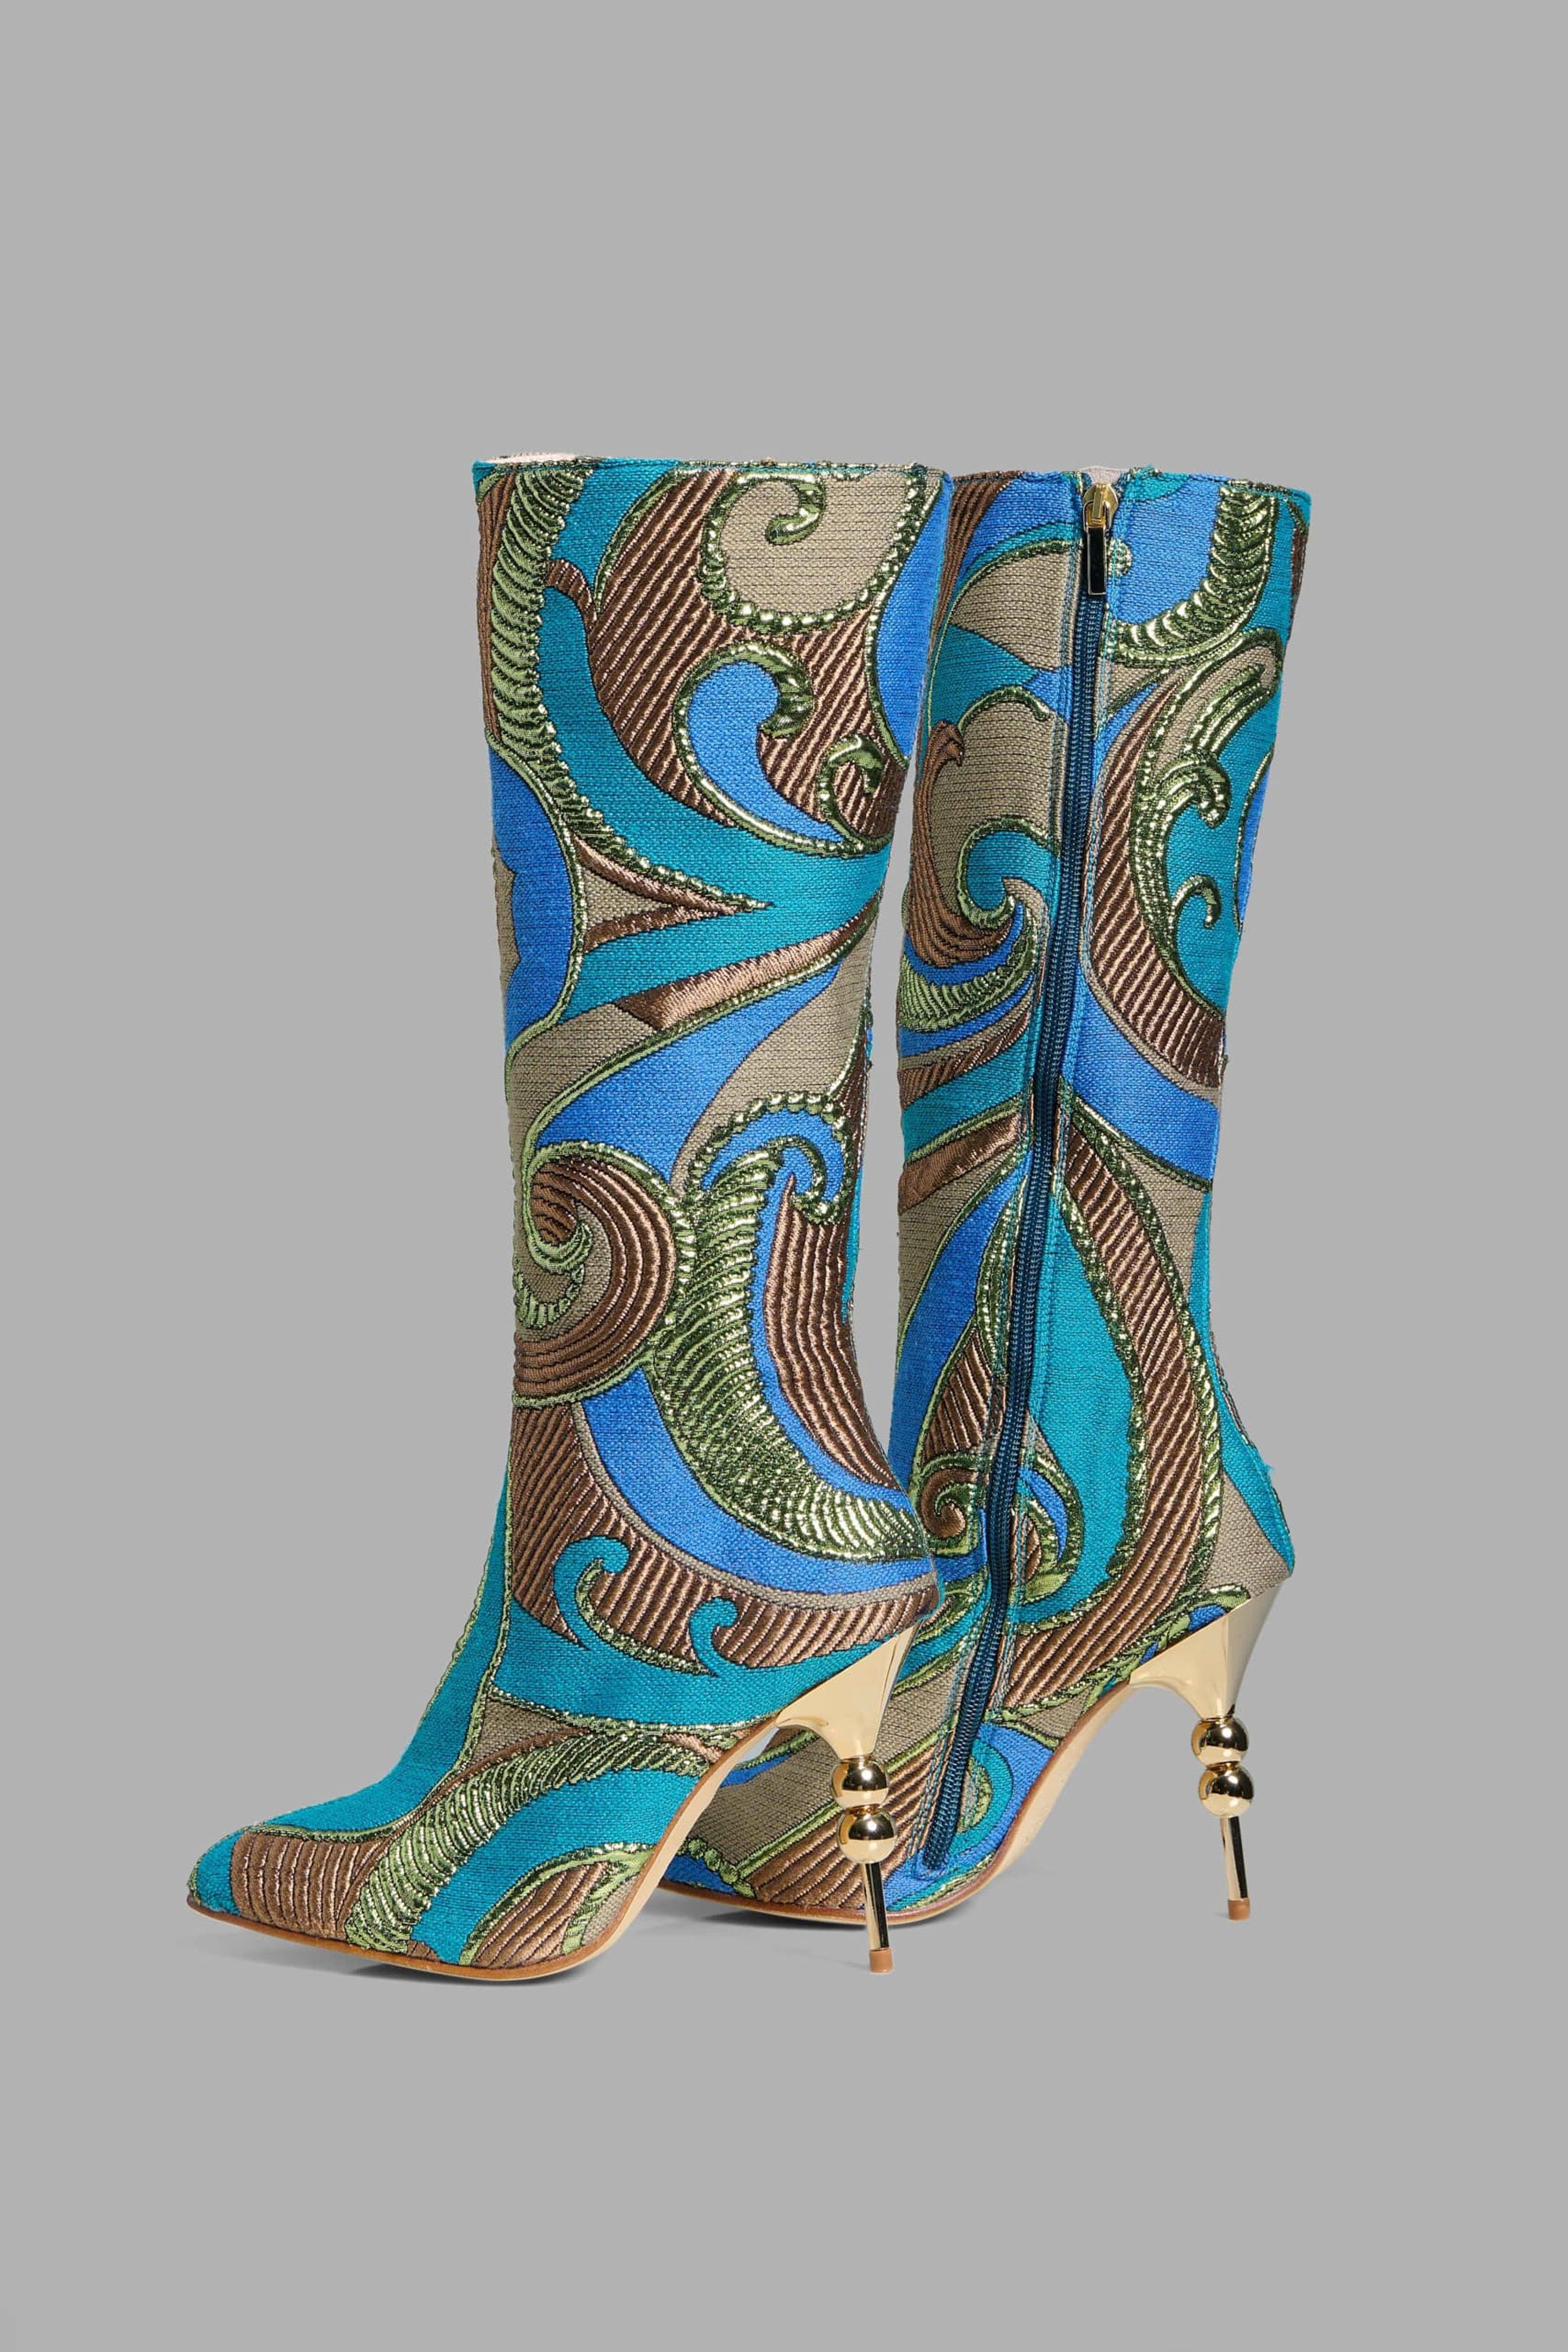 Brocade Blue Boots